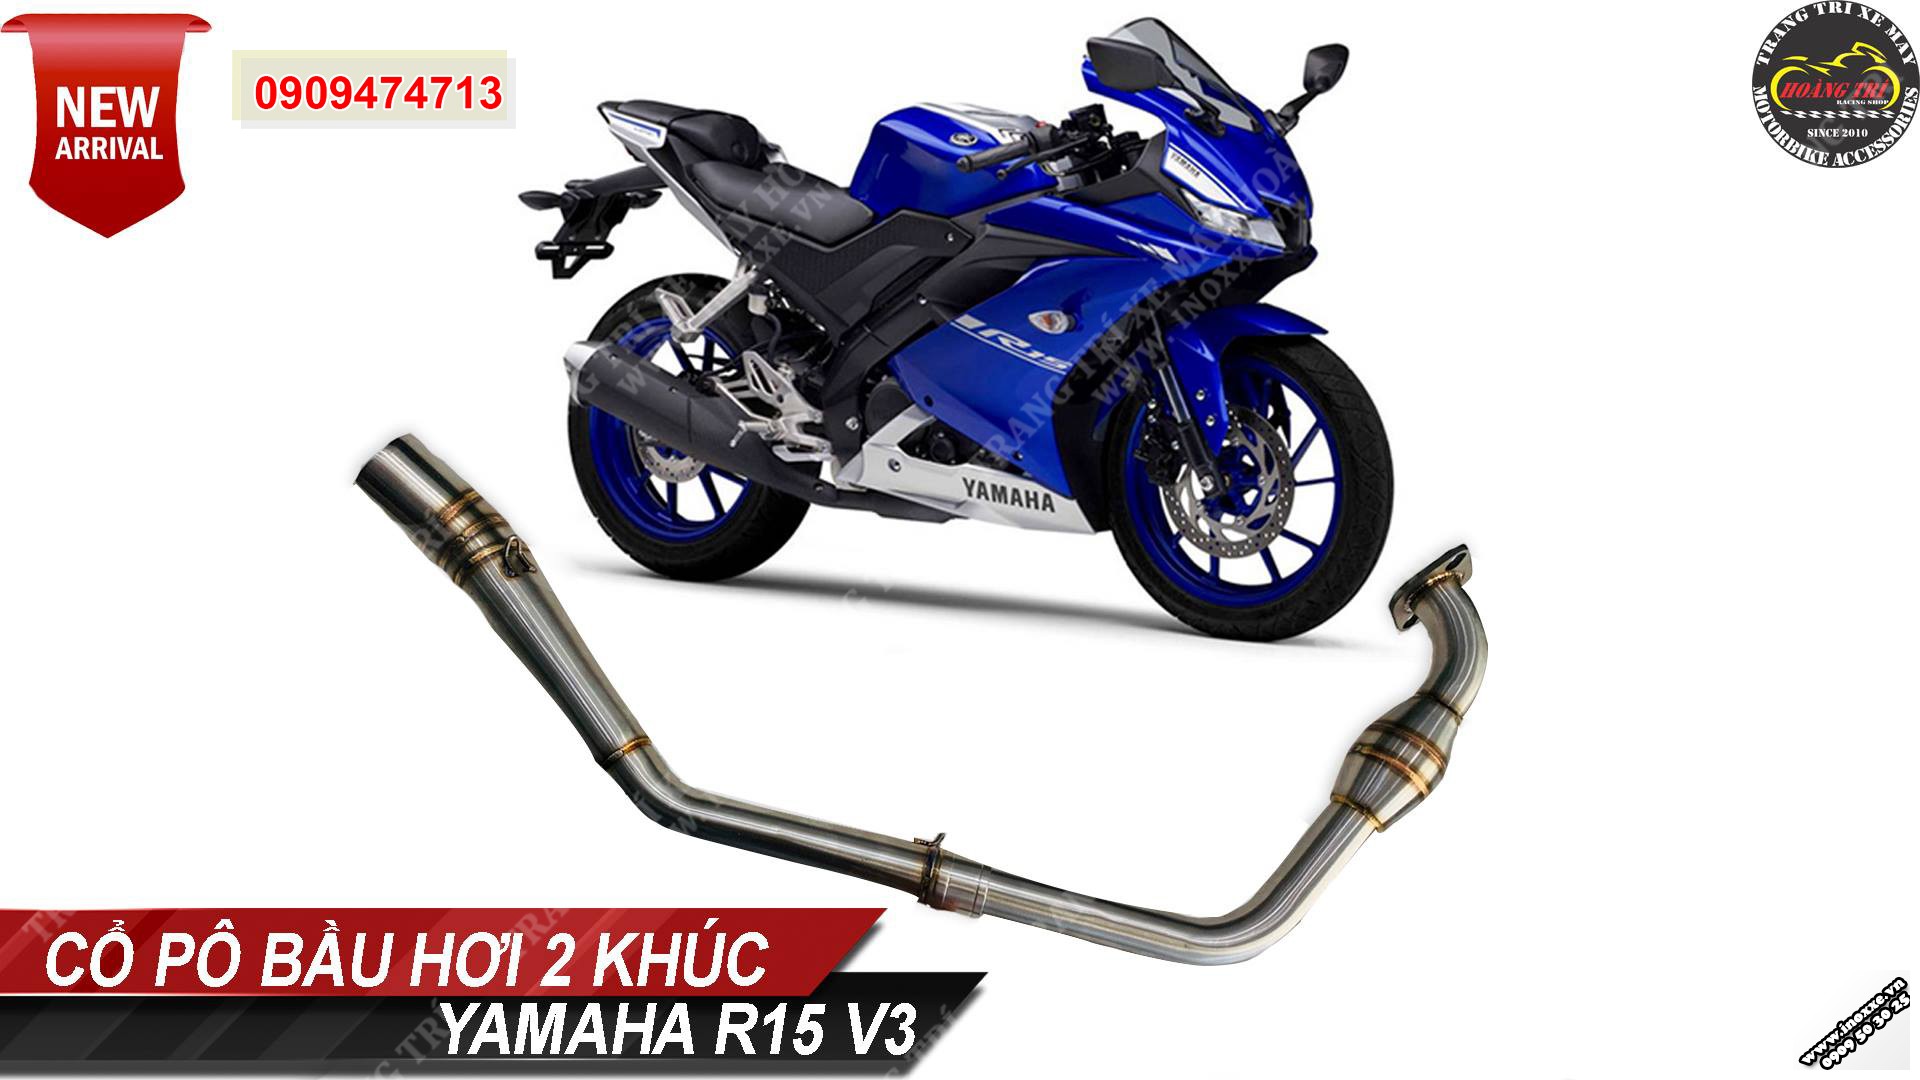 Yamaha R15 V3 độ cánh gió kiểu MotoGP từ Saigon MaxSpeed